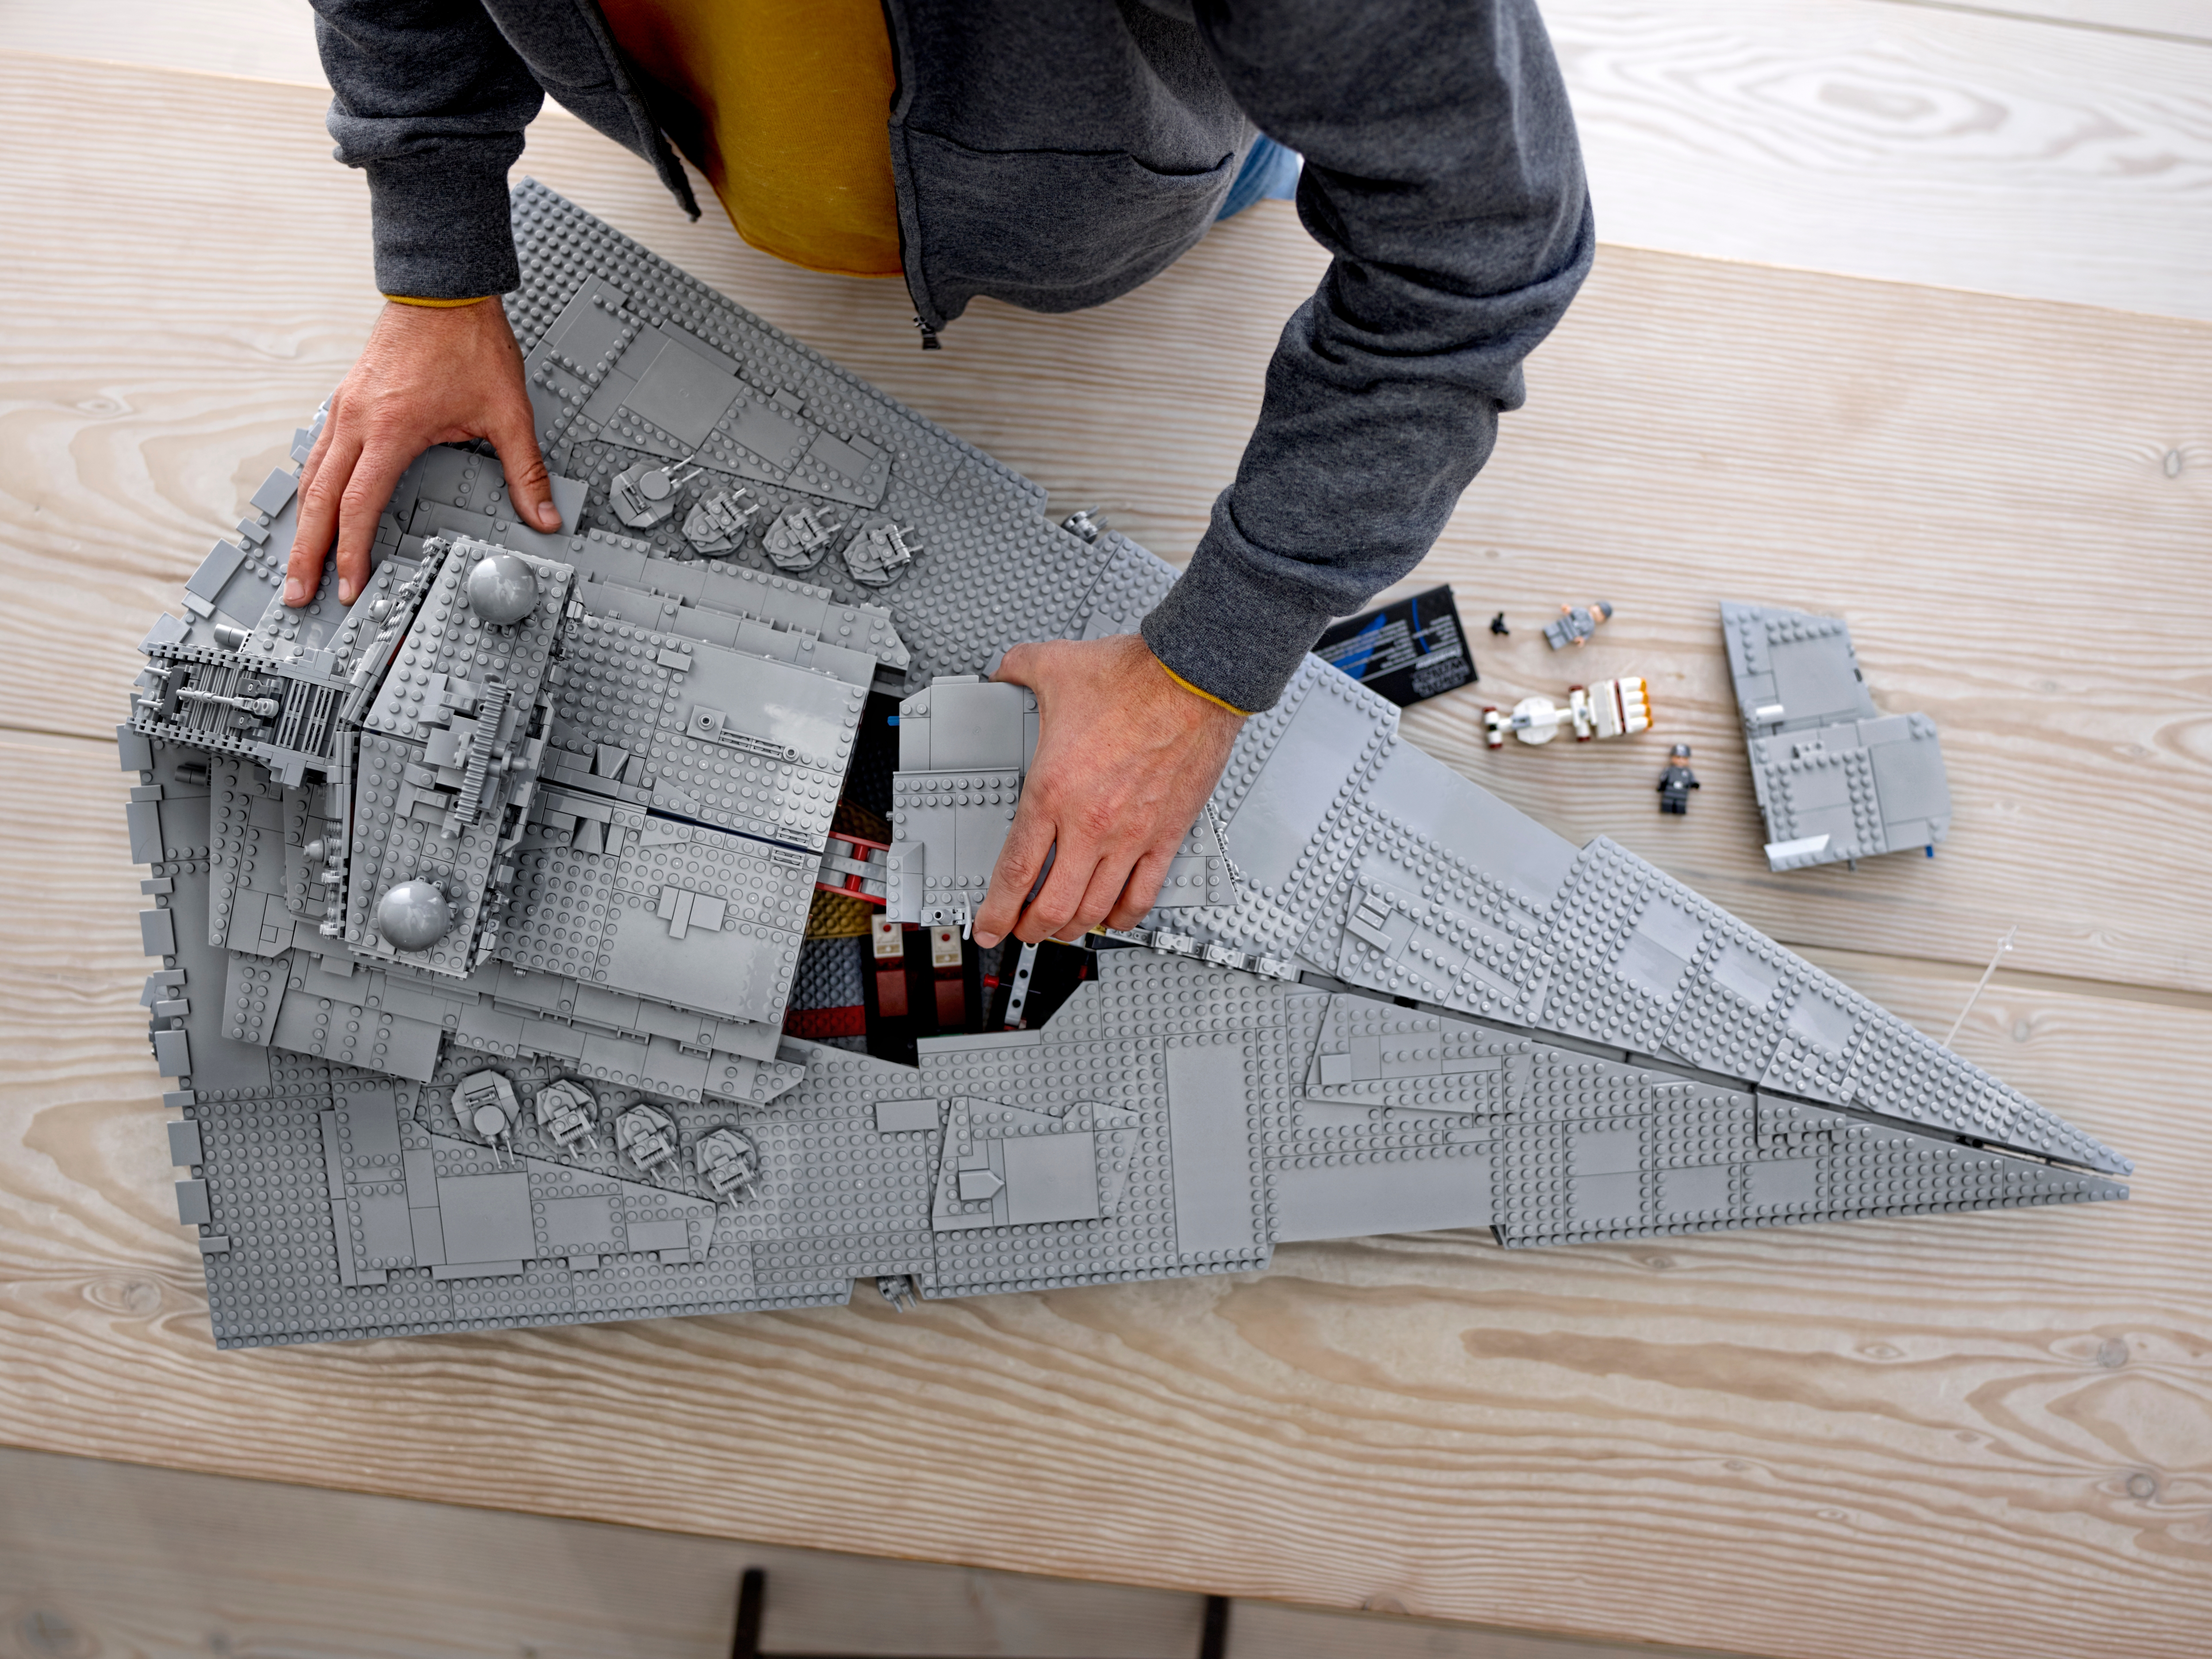 Set Review - #75252-1: Imperial Star Destroyer - UCS - Star Wars — Bricks  for Bricks